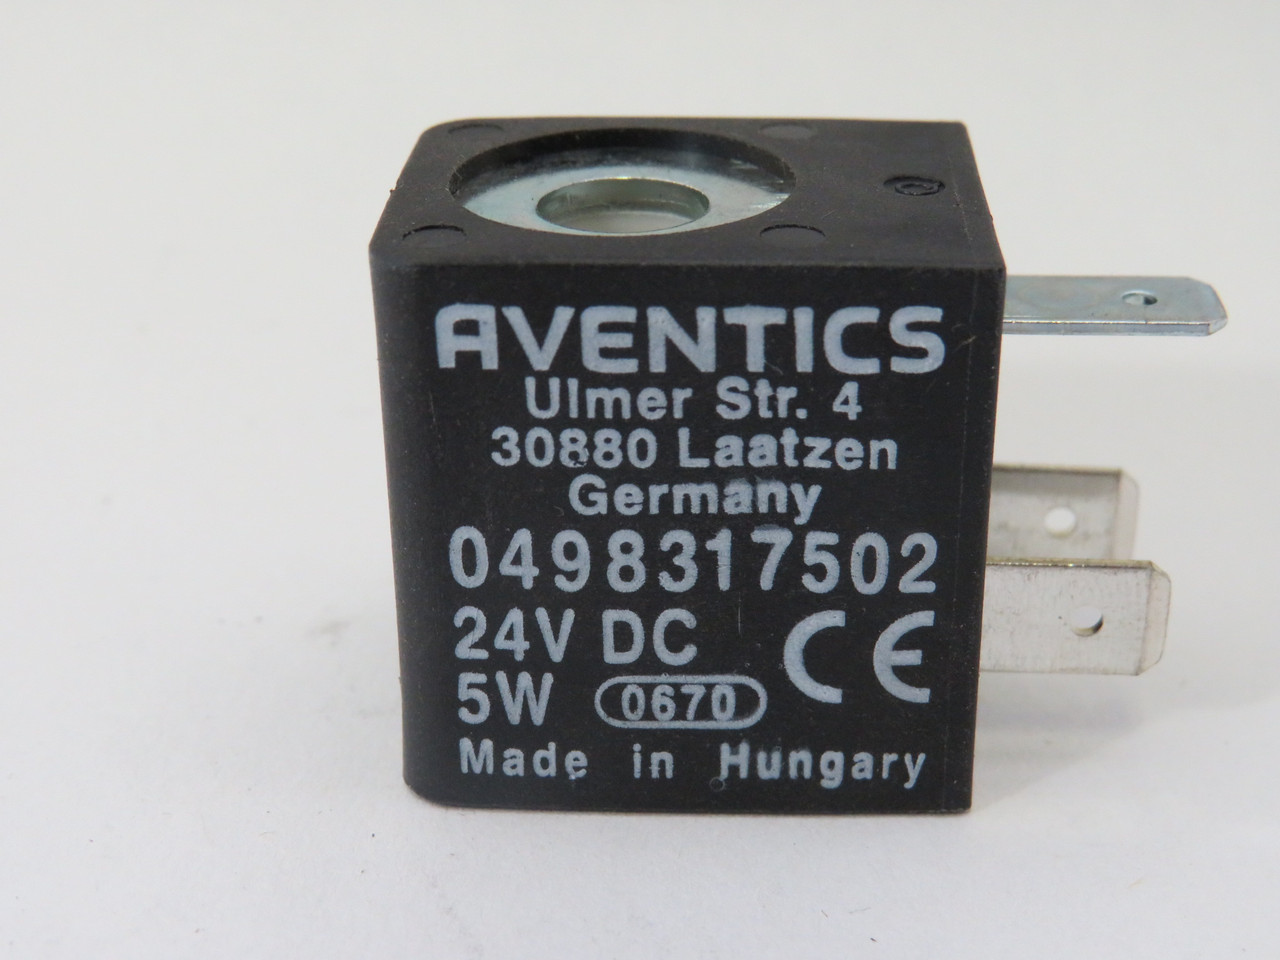 Aventics 0498317502 Solenoid Coil 24VDC 5W for 22mm Valve USED